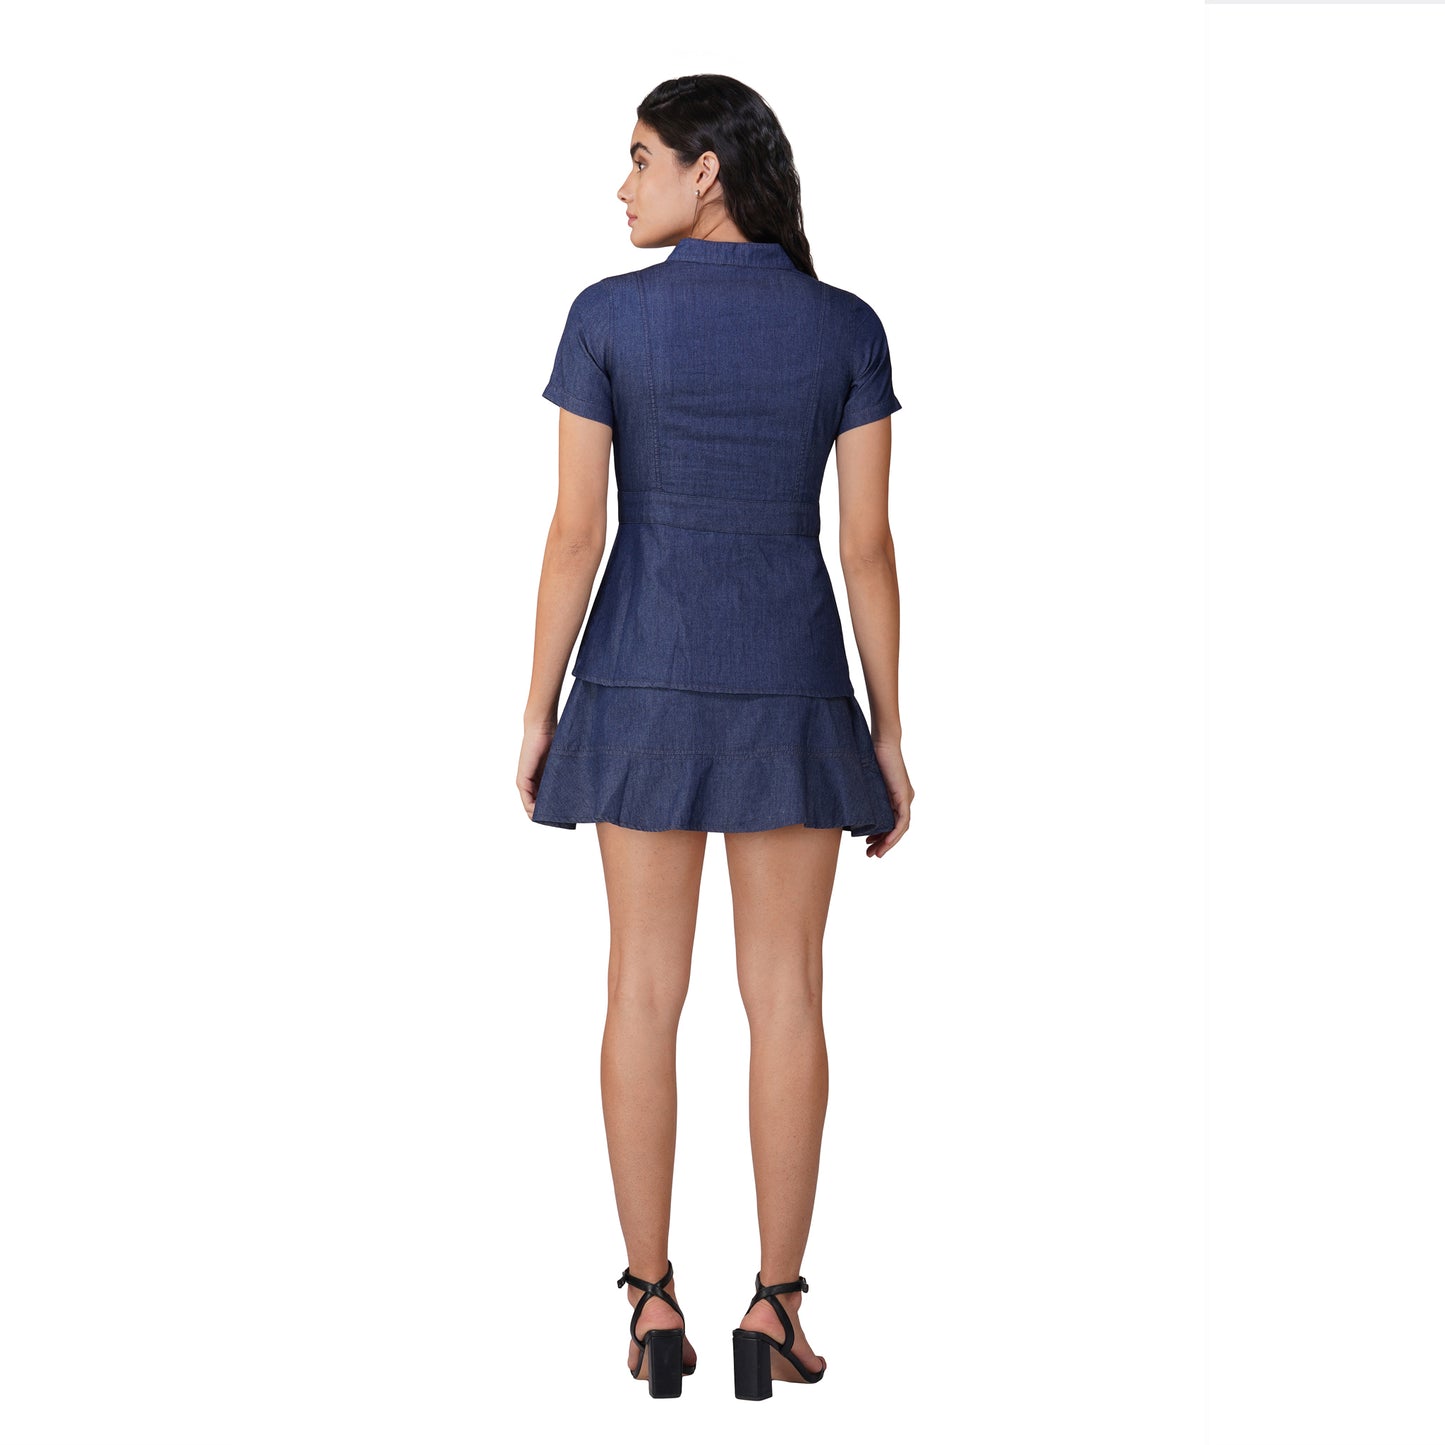 SLAY. Women's Denim Half Sleeves Button Up Top & Skirt Co-ord Set